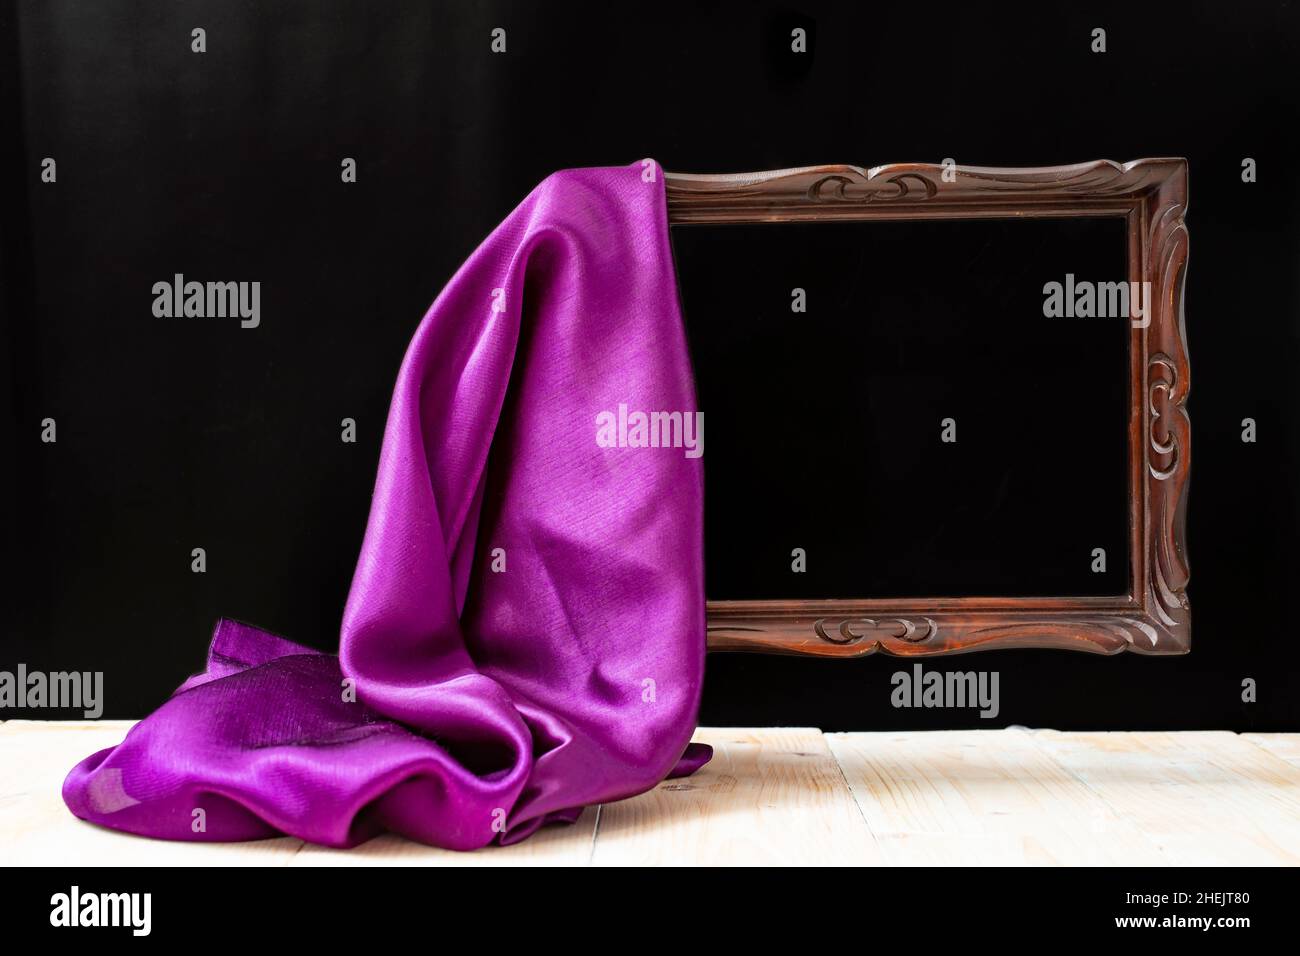 tejido sedoso que revela un marco de madera levitante, sobre fondo negro Foto de stock